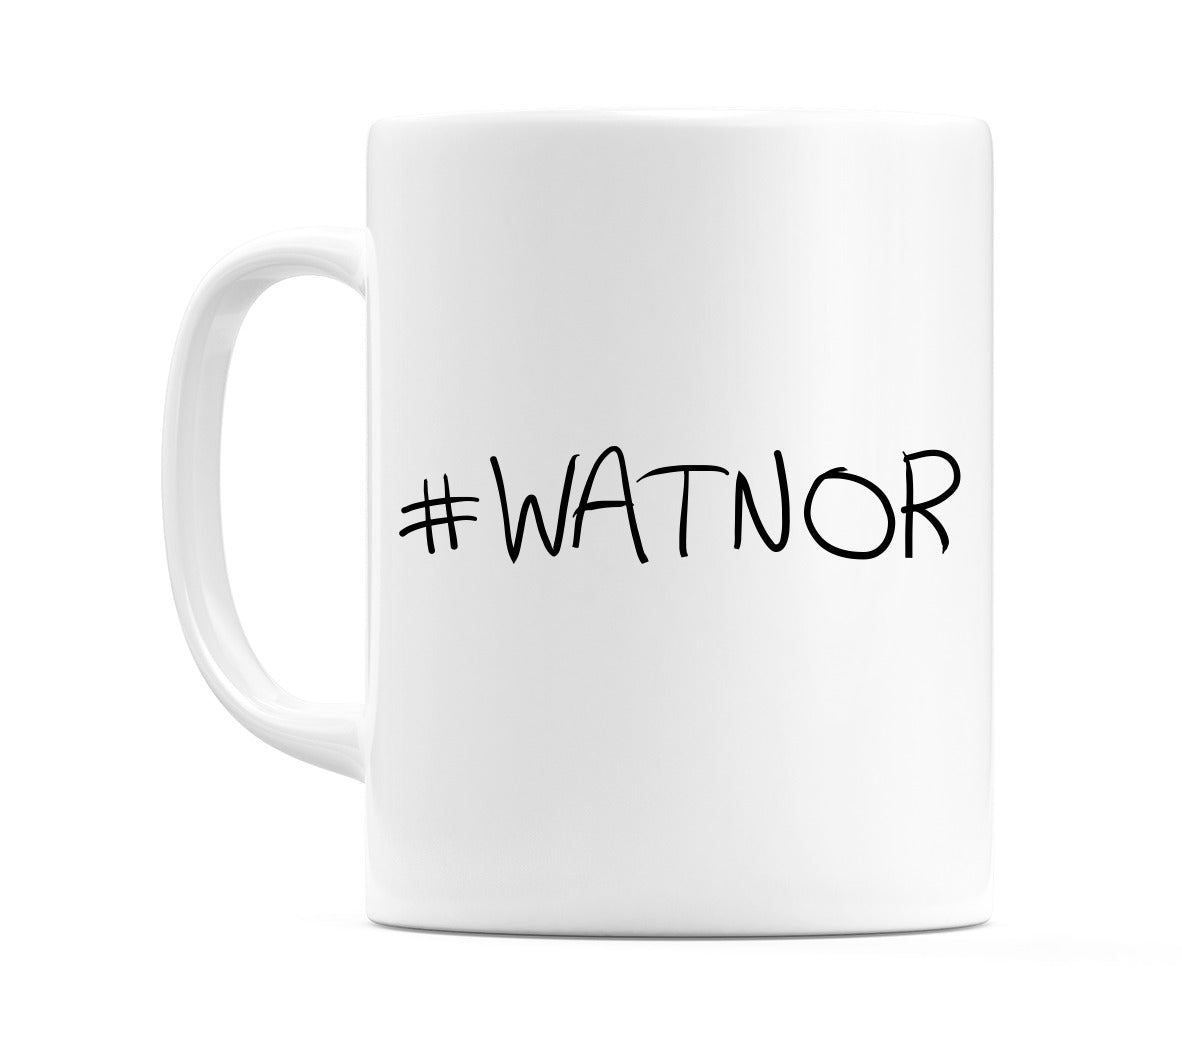 #WATNOR Mug